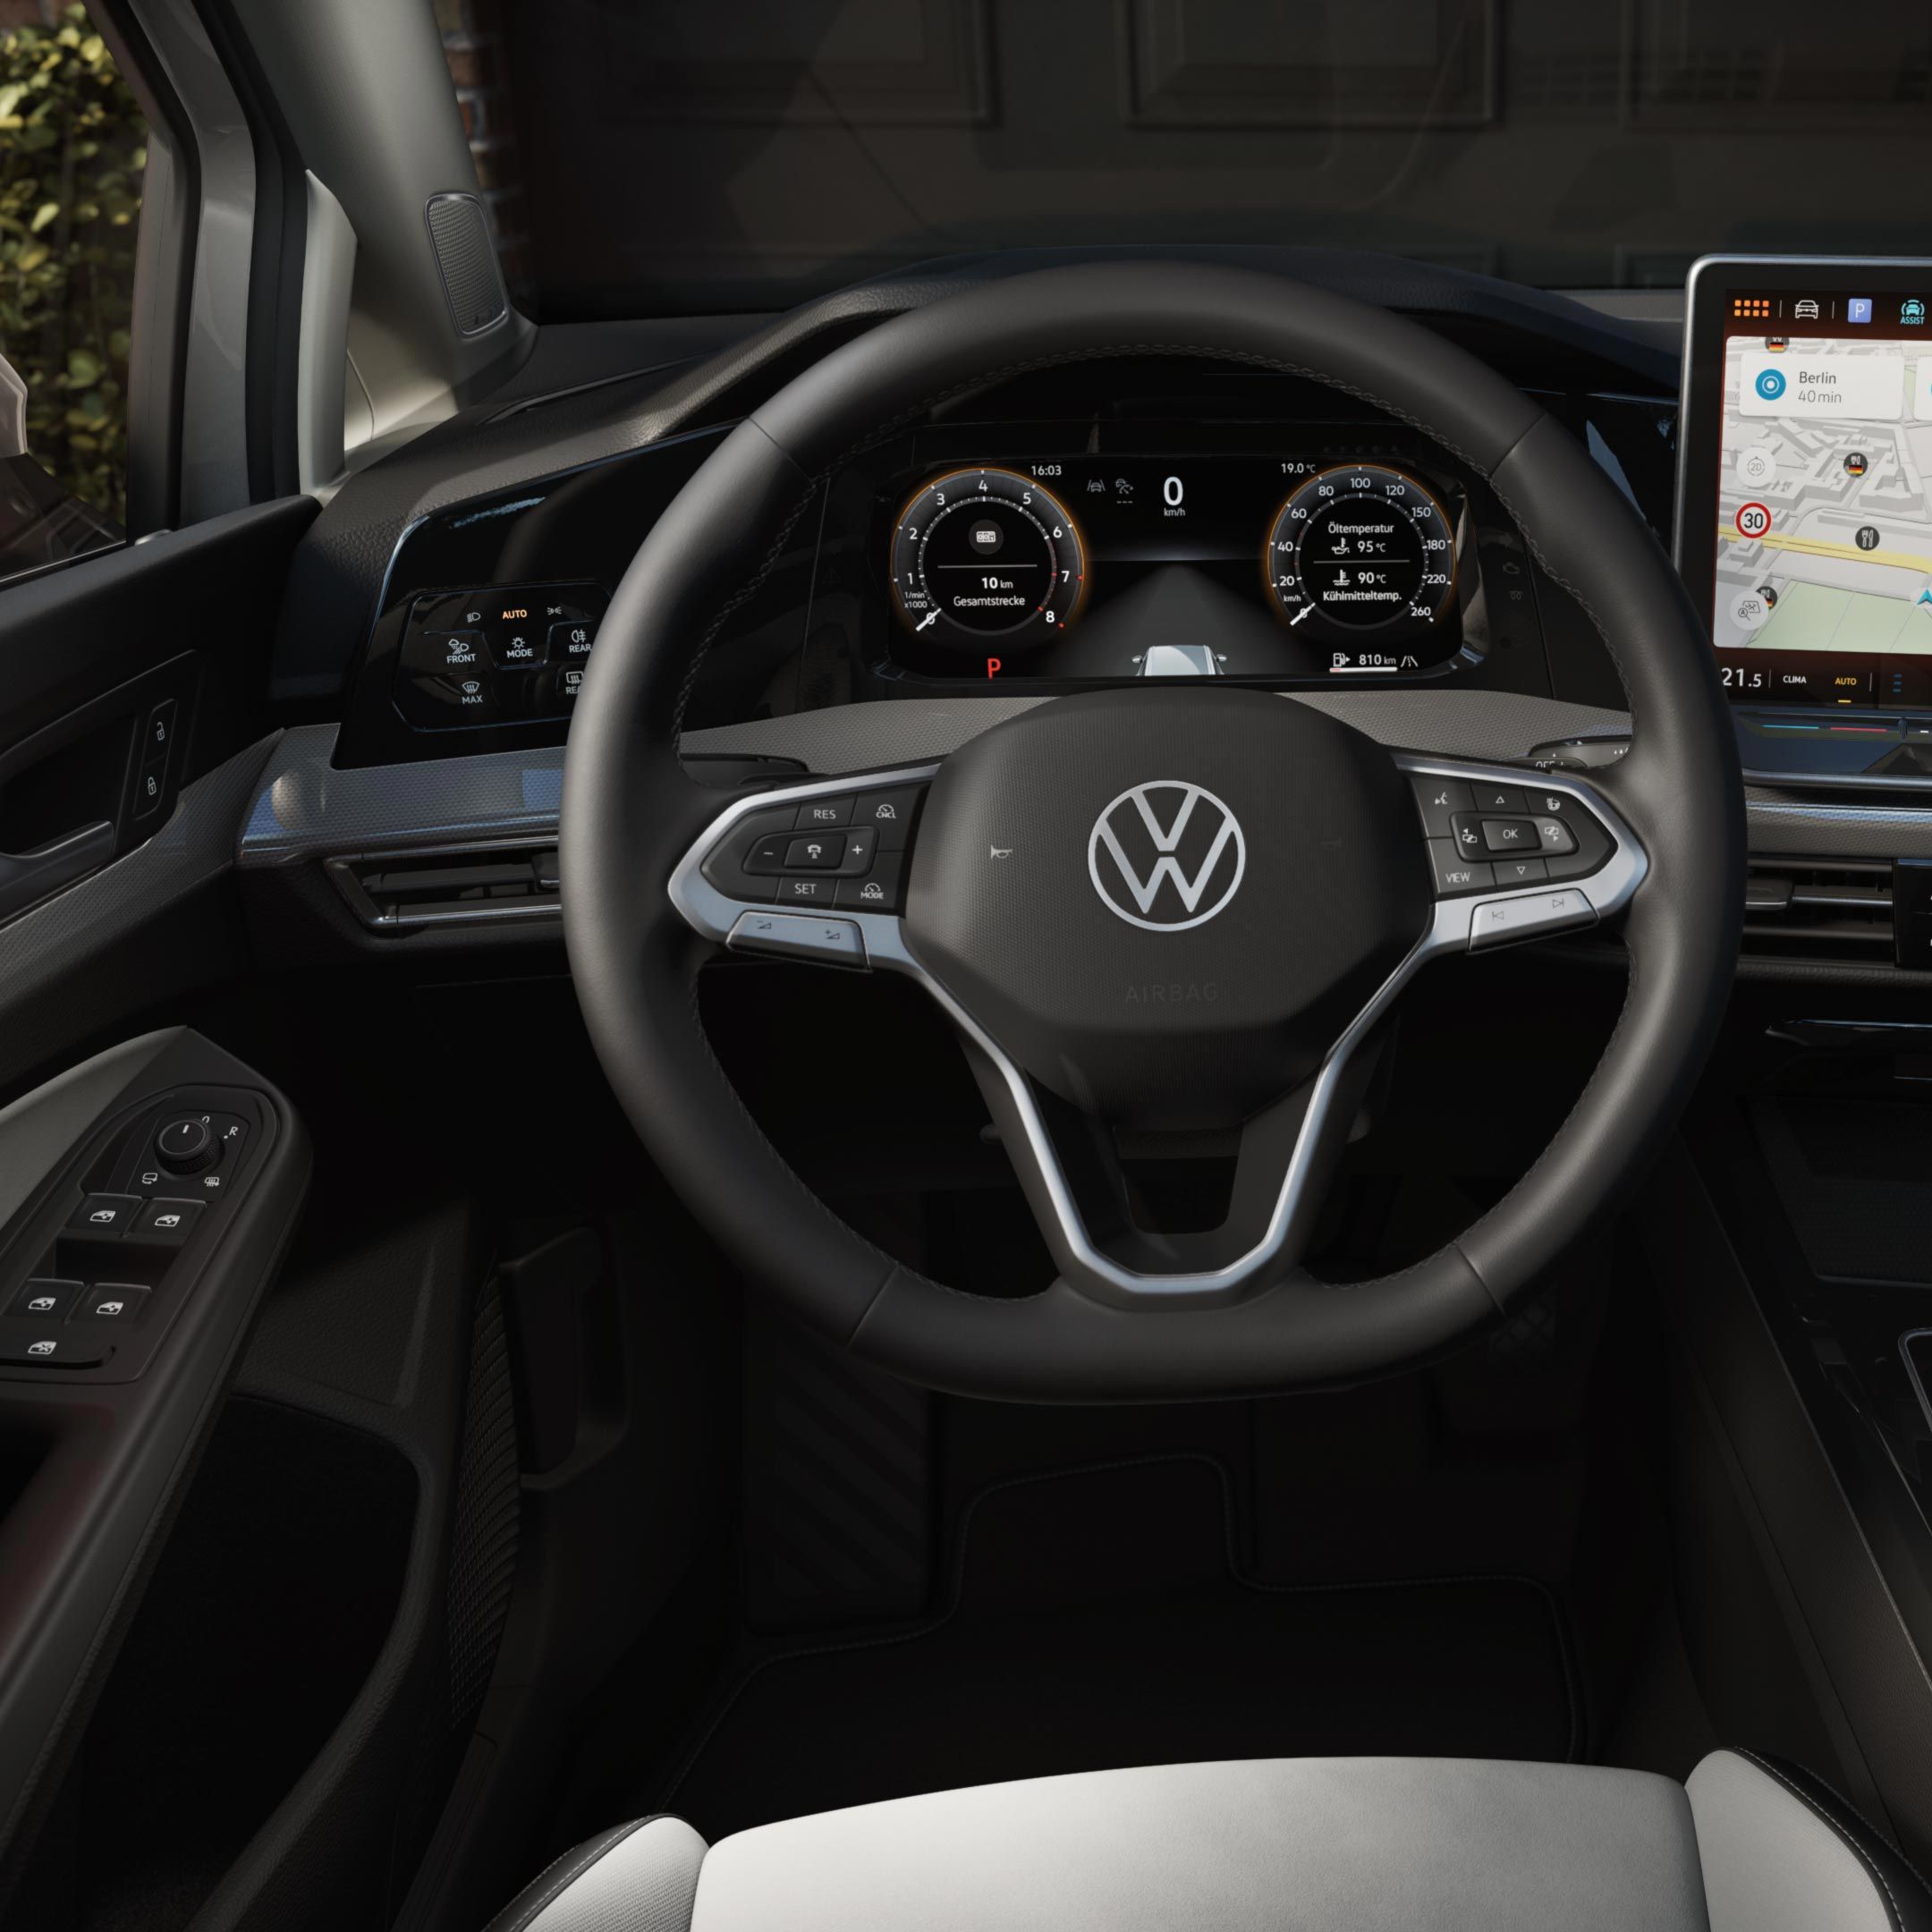 Lenkrad, Digital Cockpit und Infotainment des VW Golf Variant